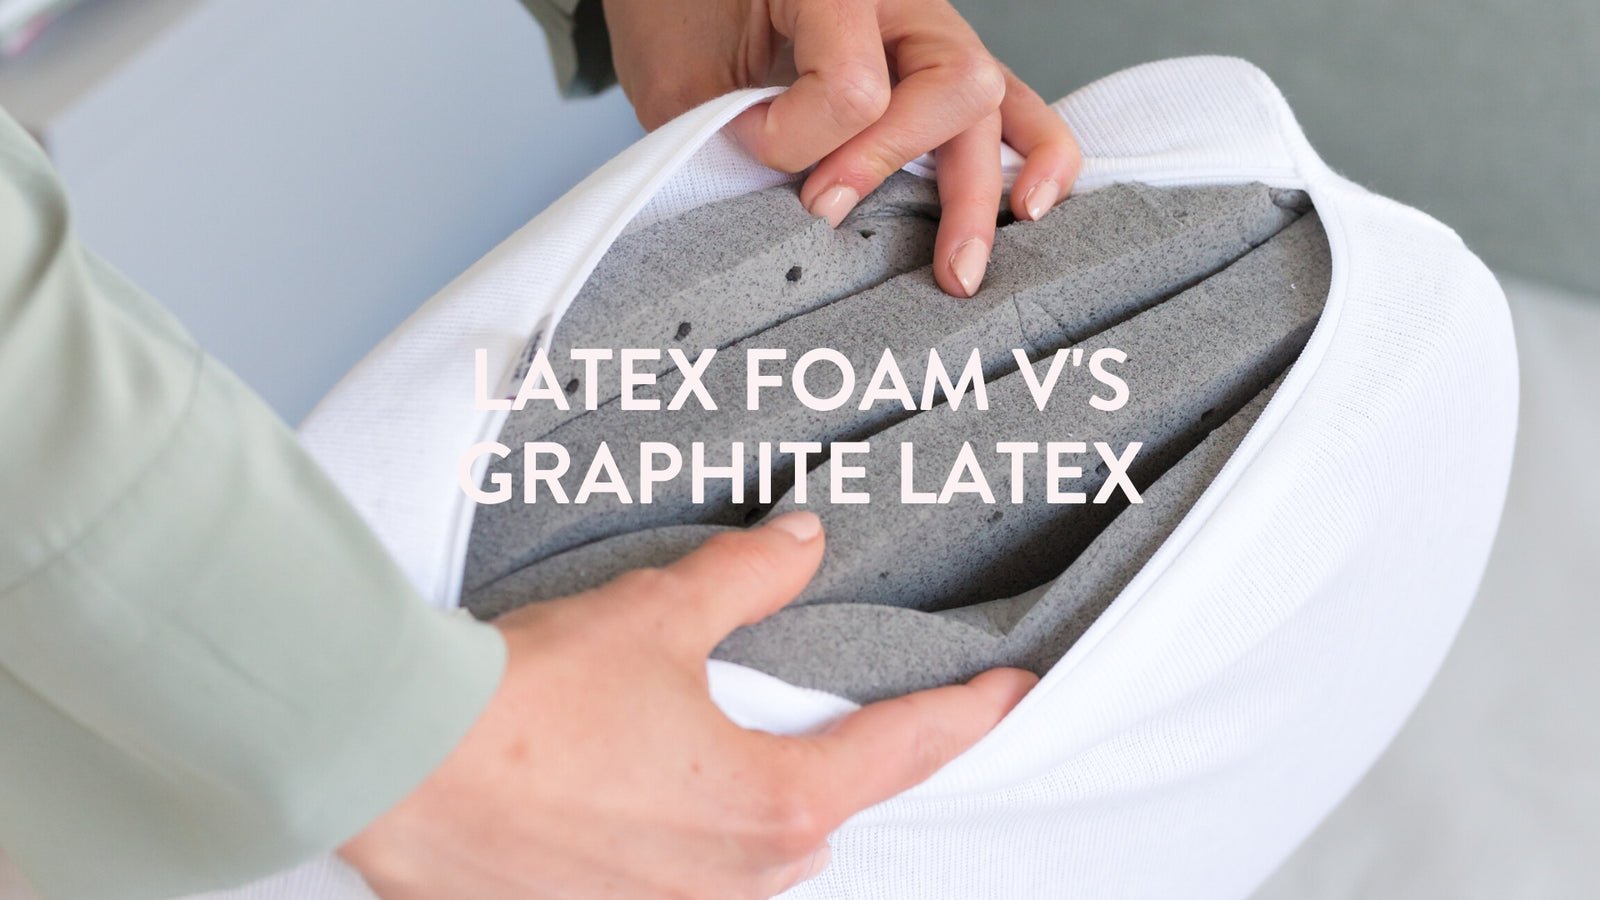 What is Latex Foam V's Graphite Latex?